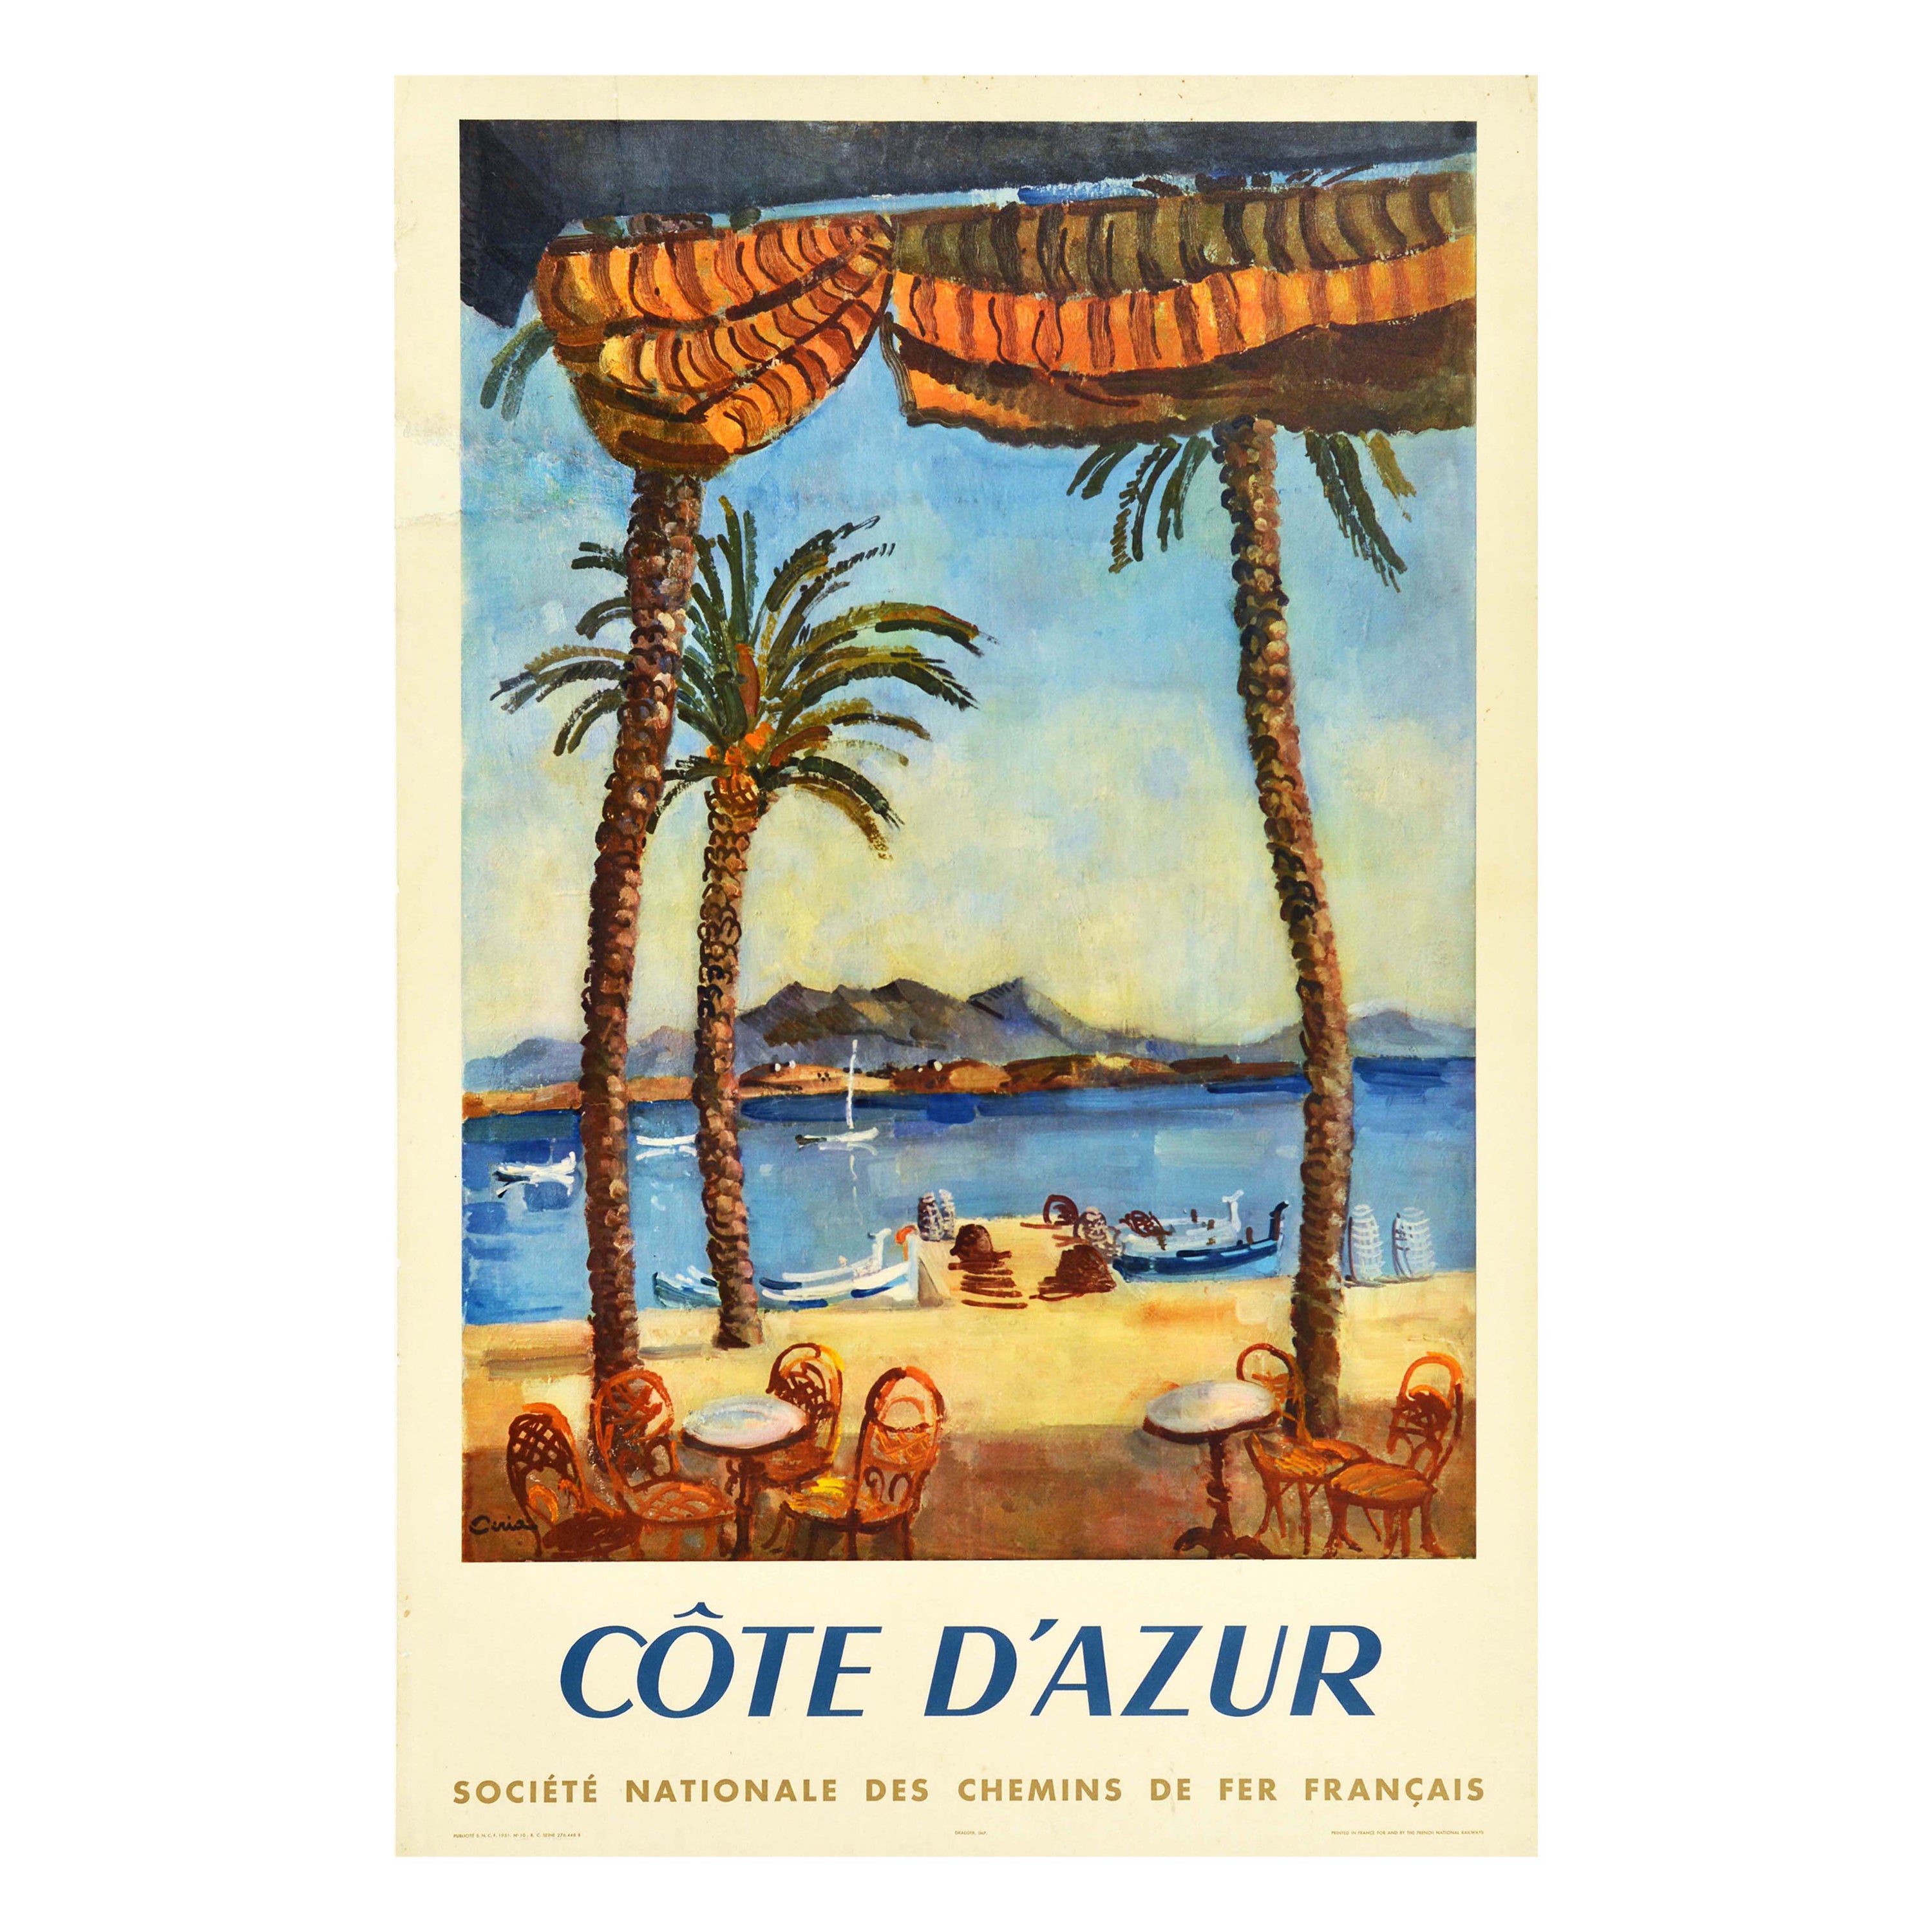 Original Vintage Rail Travel Poster Cote D'azur French Riviera Mediterranean Sea